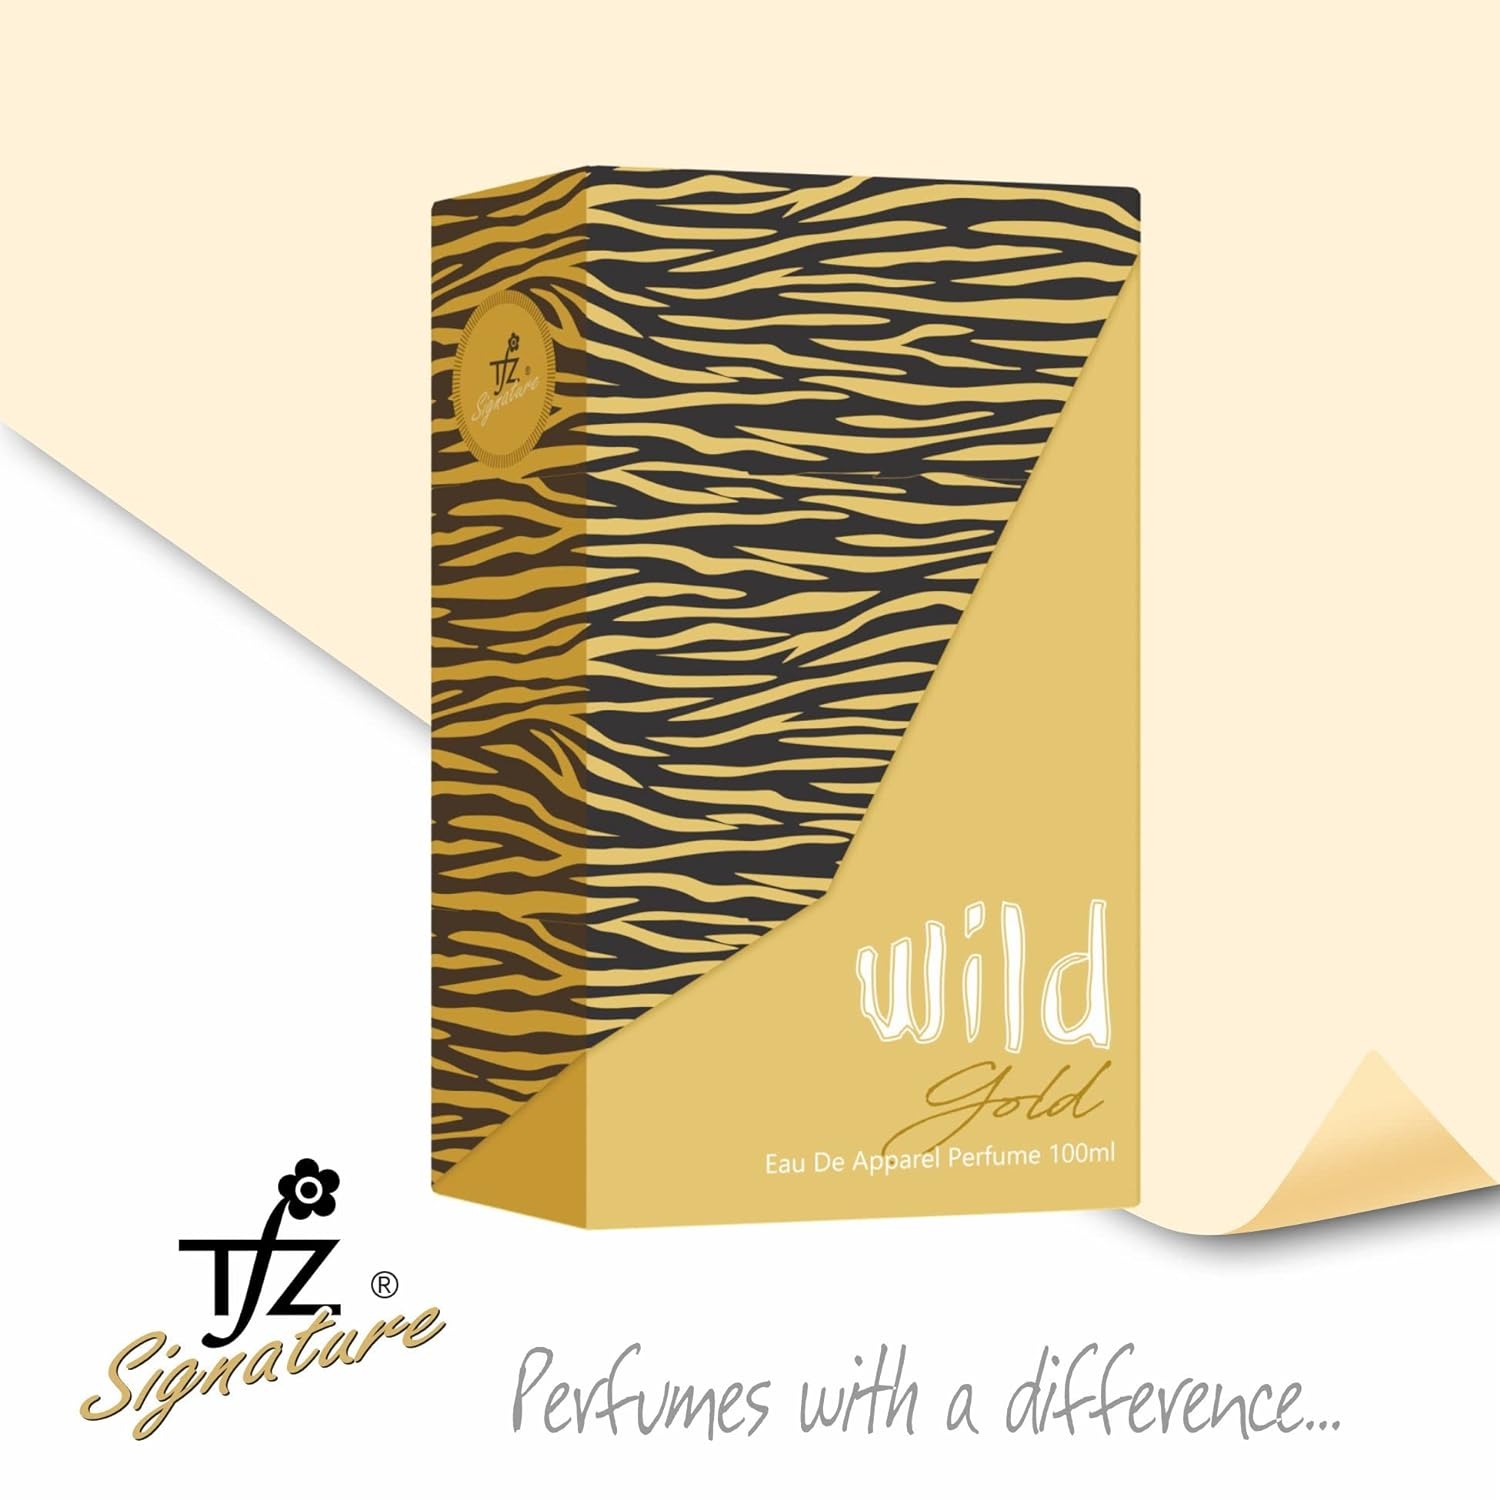 TFZ Signature Wild Gold Eau De Apparel Perfume - 100ML